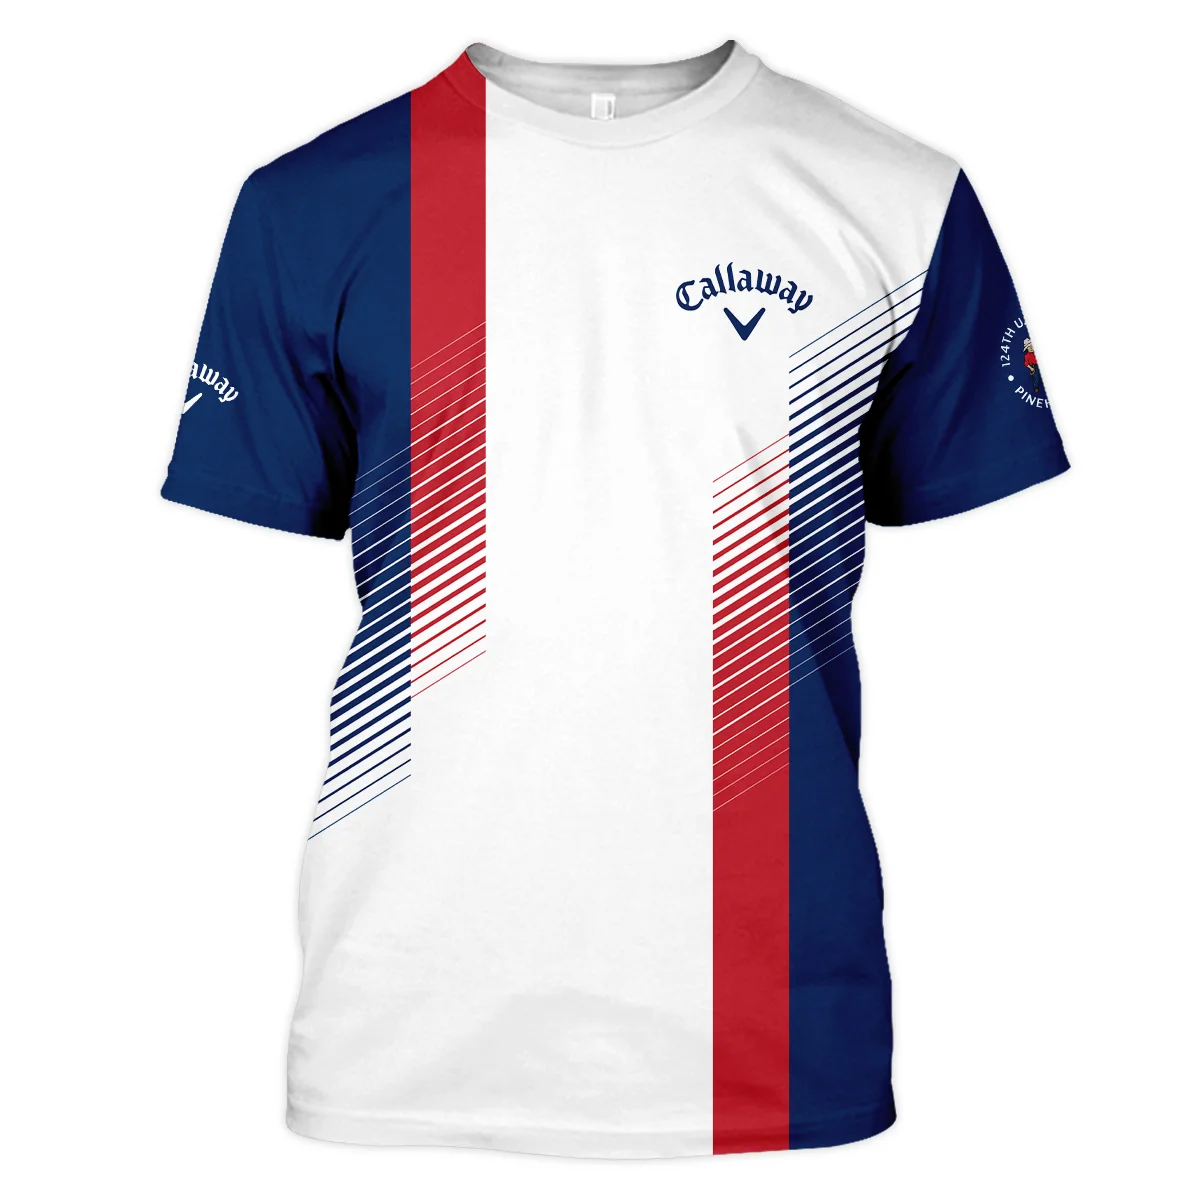 Sport Callaway 124th U.S. Open Pinehurst Golf Polo Shirt Blue Red Striped Pattern White All Over Print Polo Shirt For Men